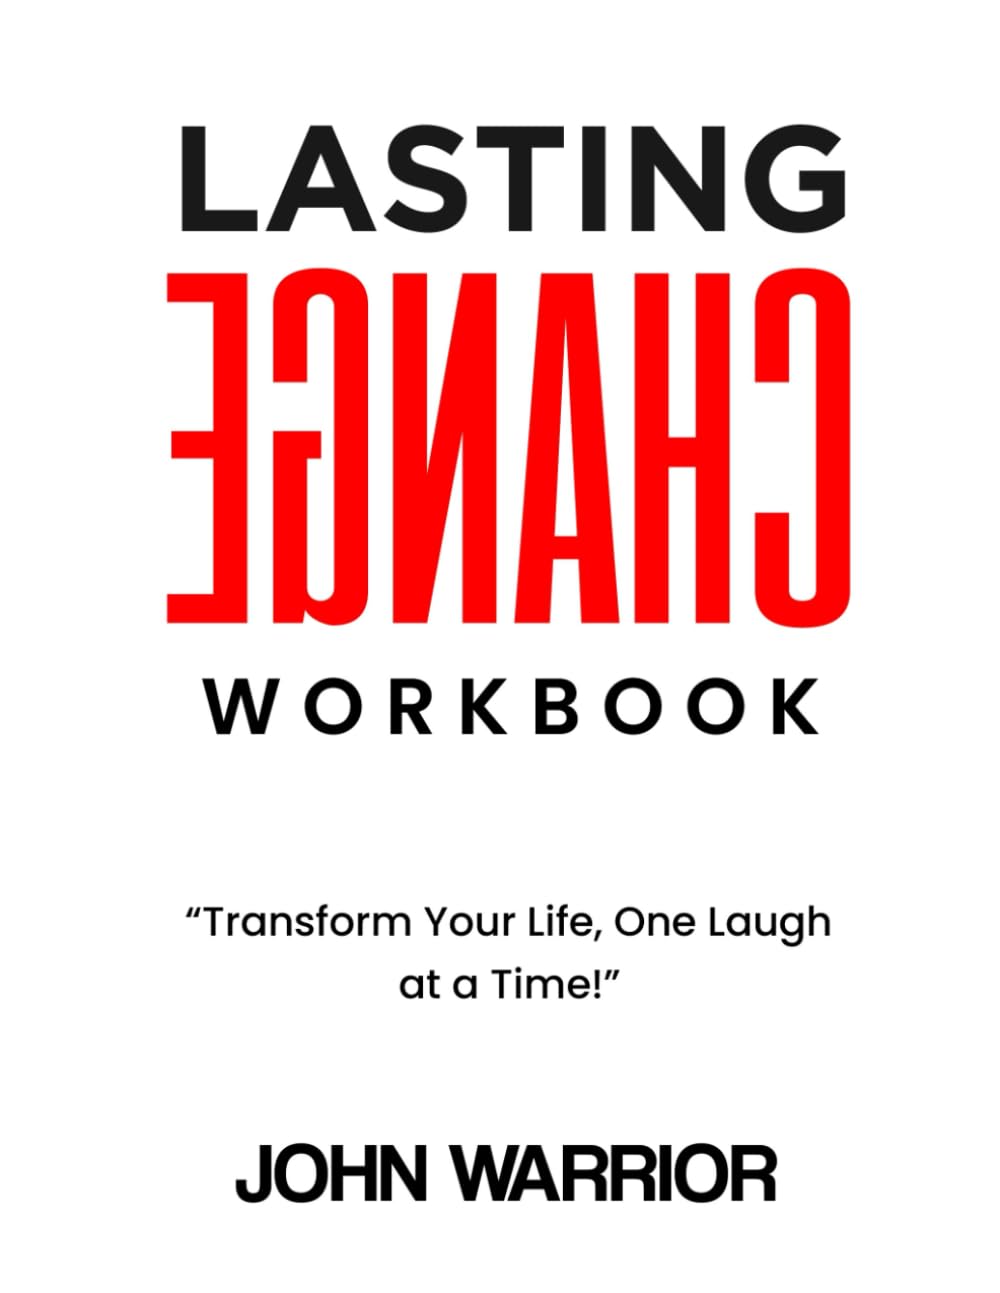 Lasting Change Workbook: 